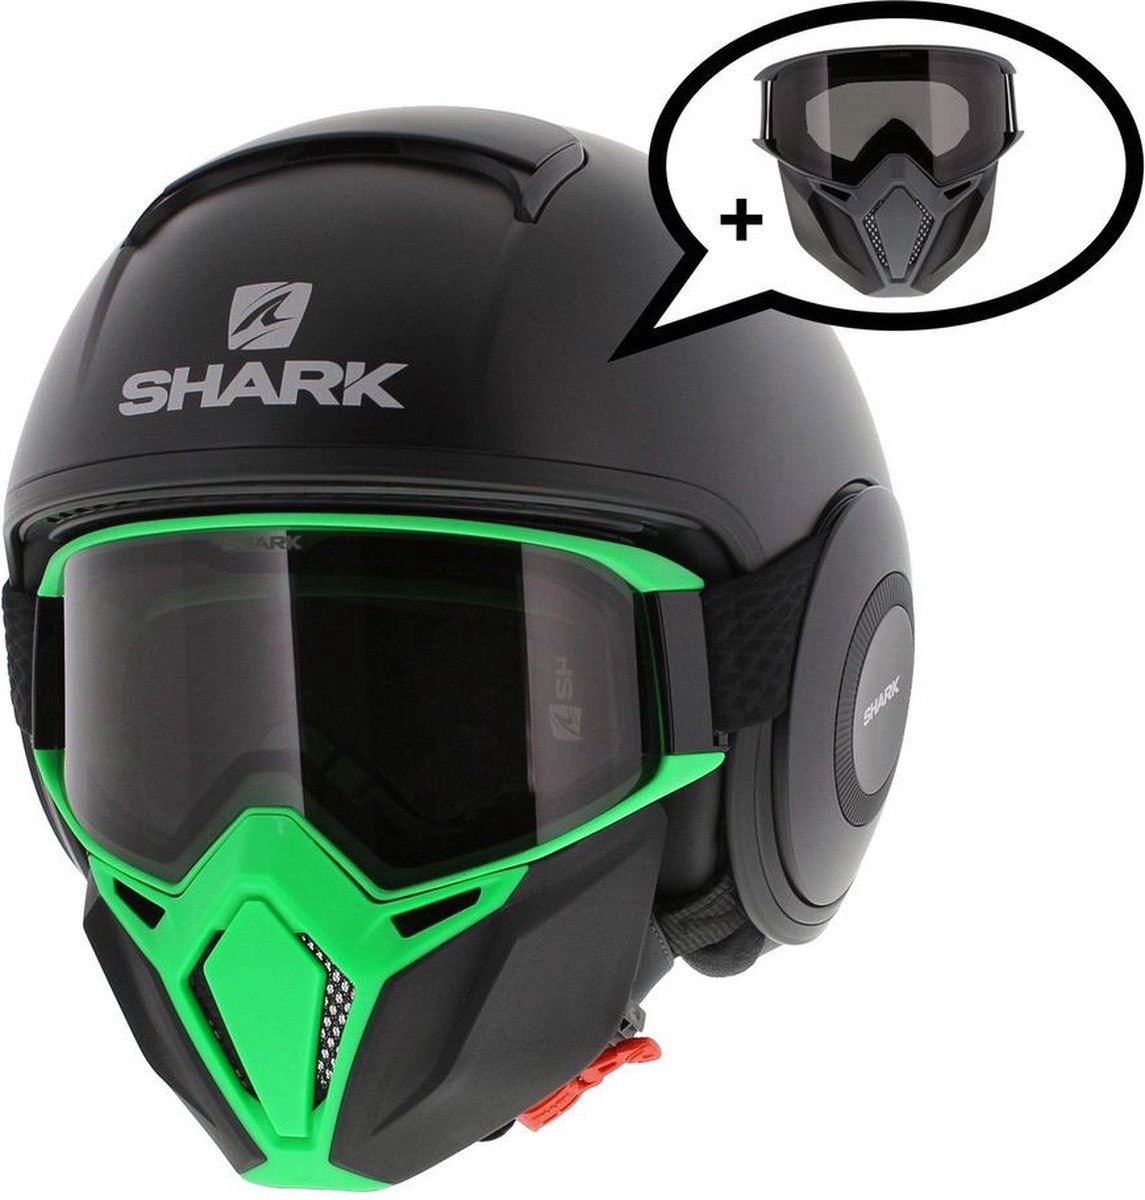 Shark Street Drak helm mat zwart groen XL - Special Edition met gratis extra zwart antraciet mondstuk